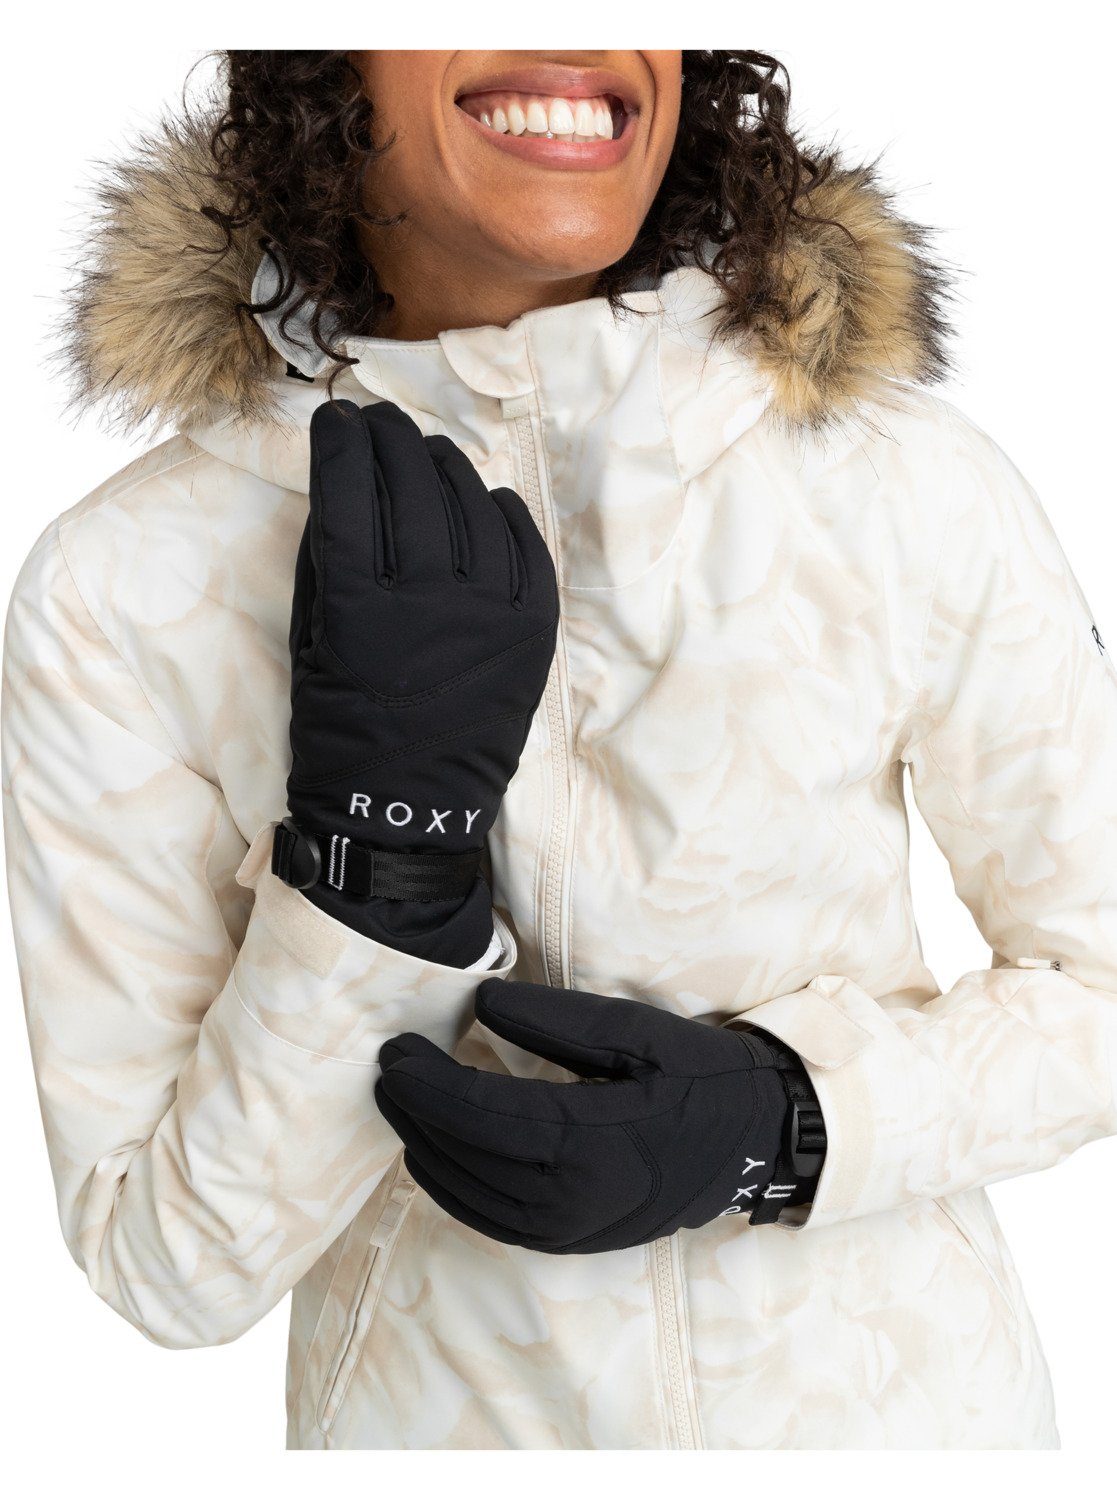 Black ROXY True Snowboardhandschuhe Roxy Jetty